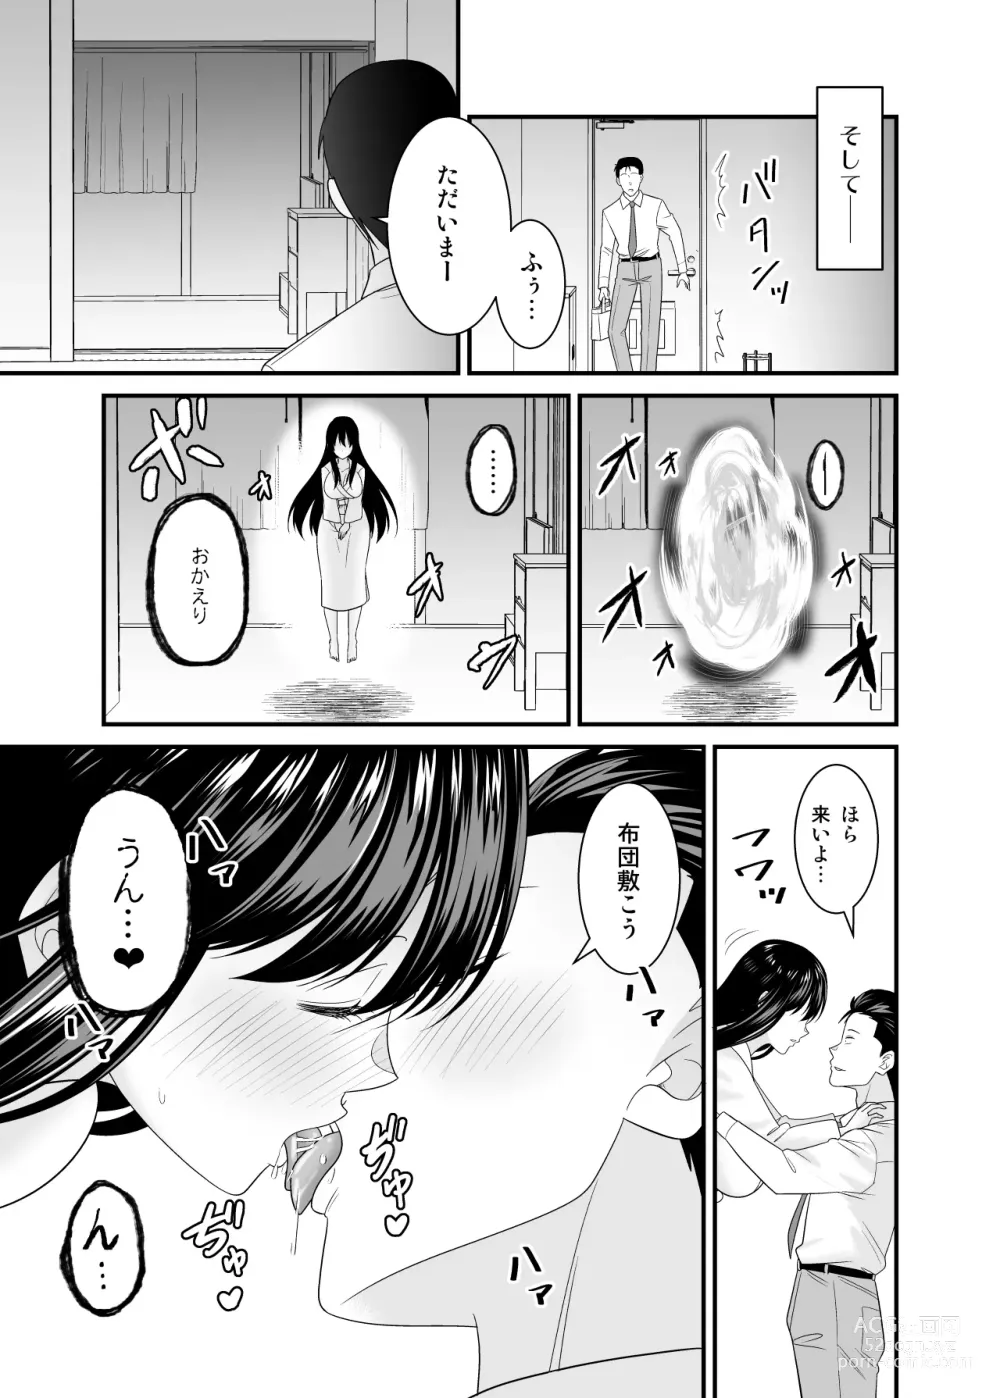 Page 54 of doujinshi ヤバい事故物件に女幽霊が出たけど無職底辺の俺はセックスしまくる